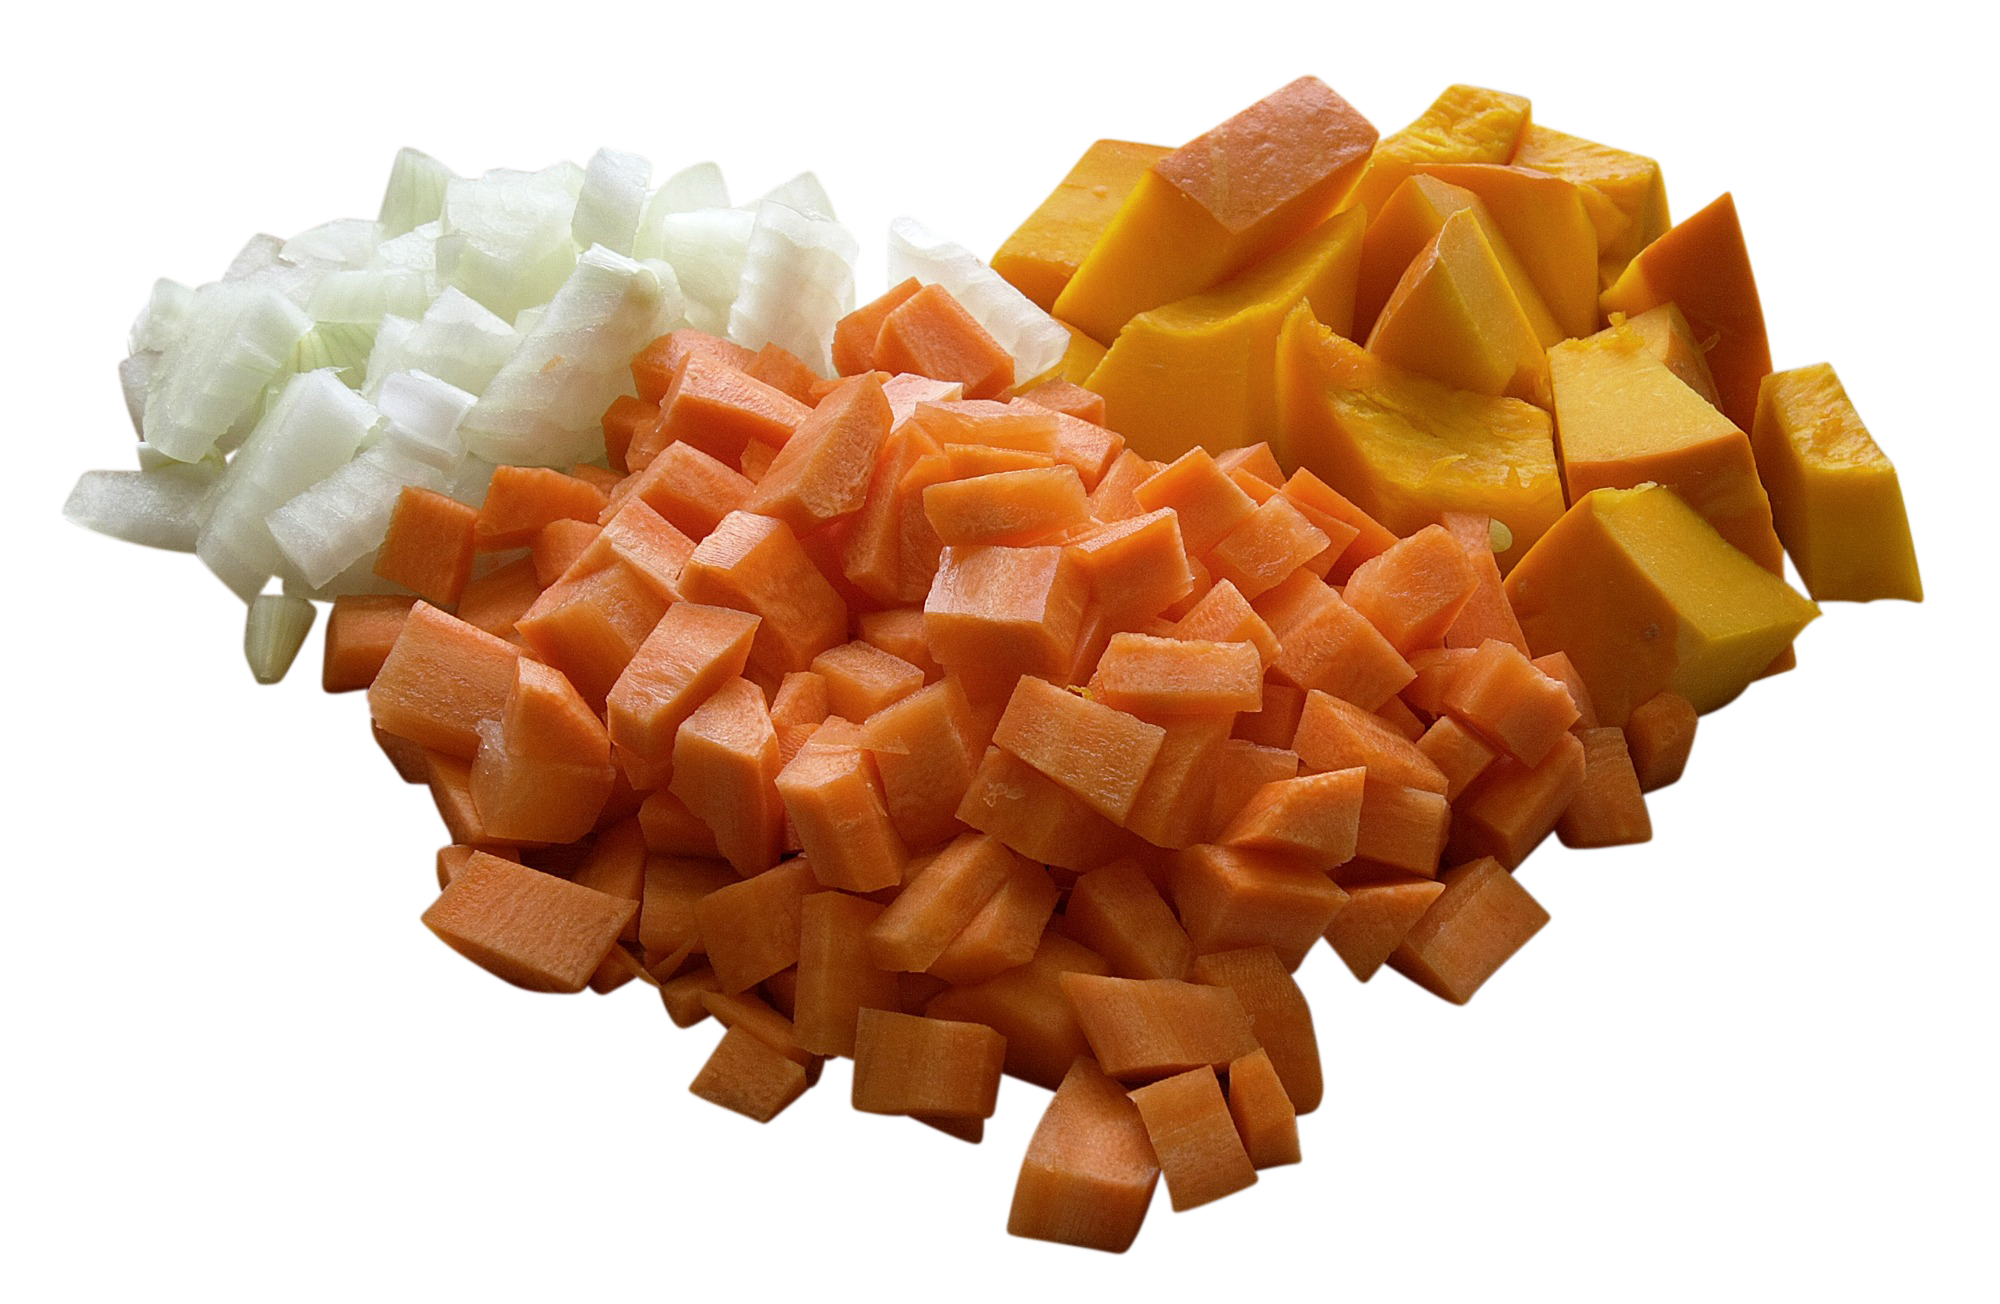 Cube Shaped Cut vegetables